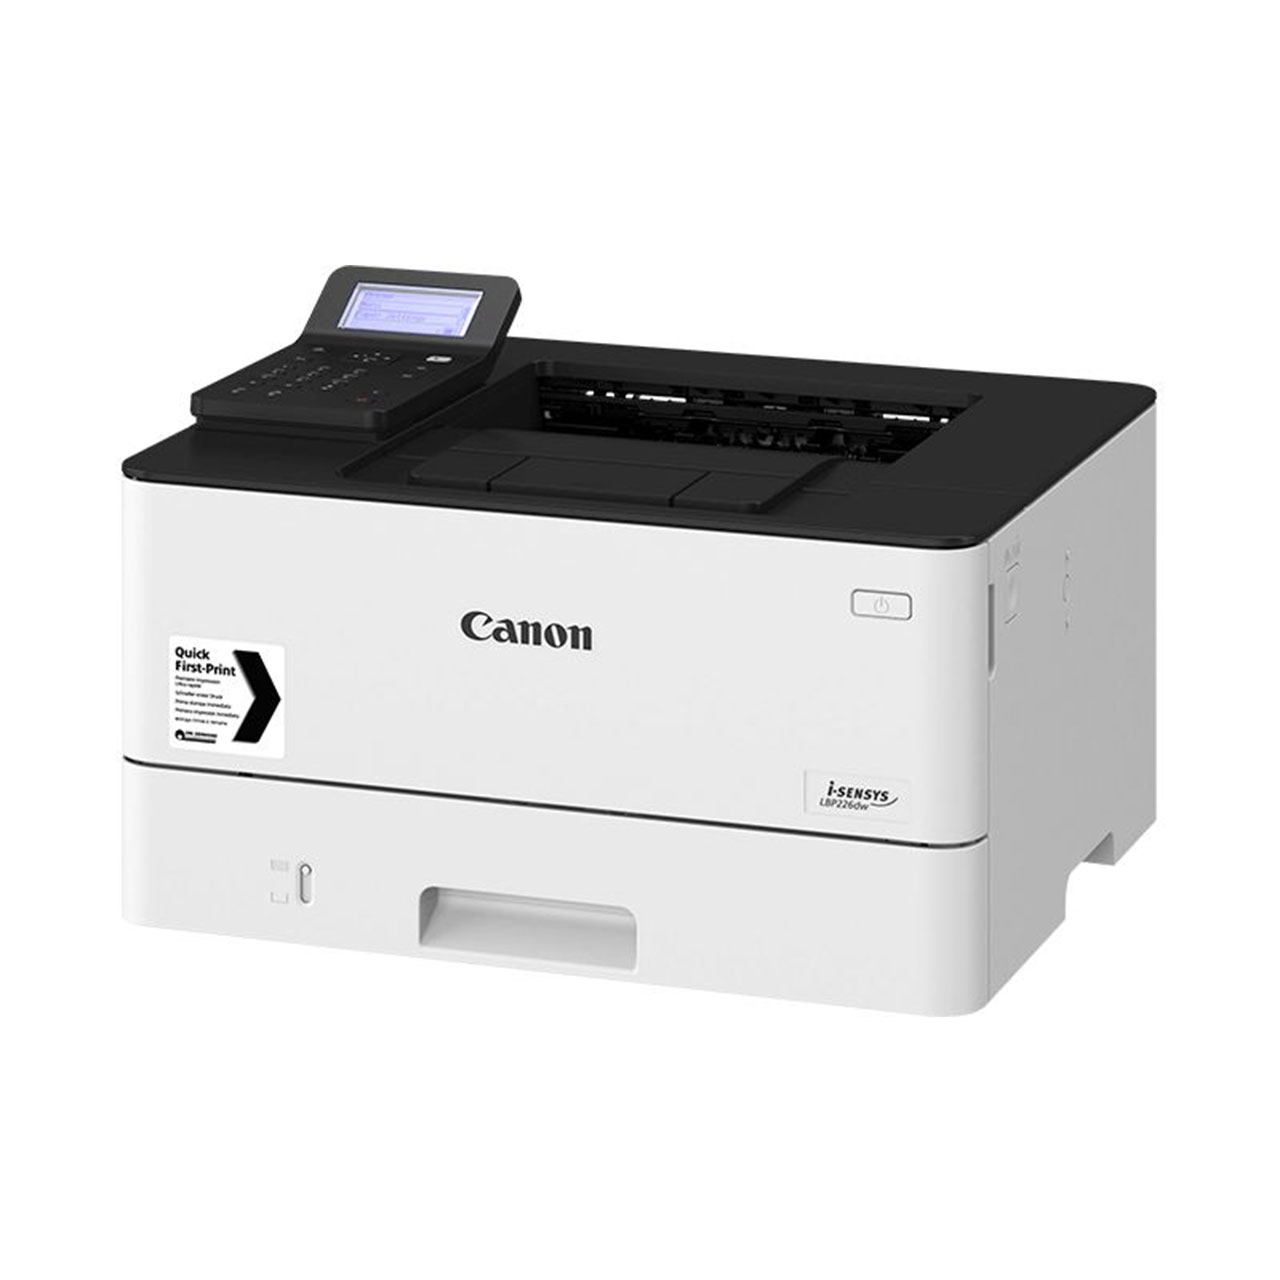 Toner cartridge compatible with Canon i-SENSYS LBP226dw